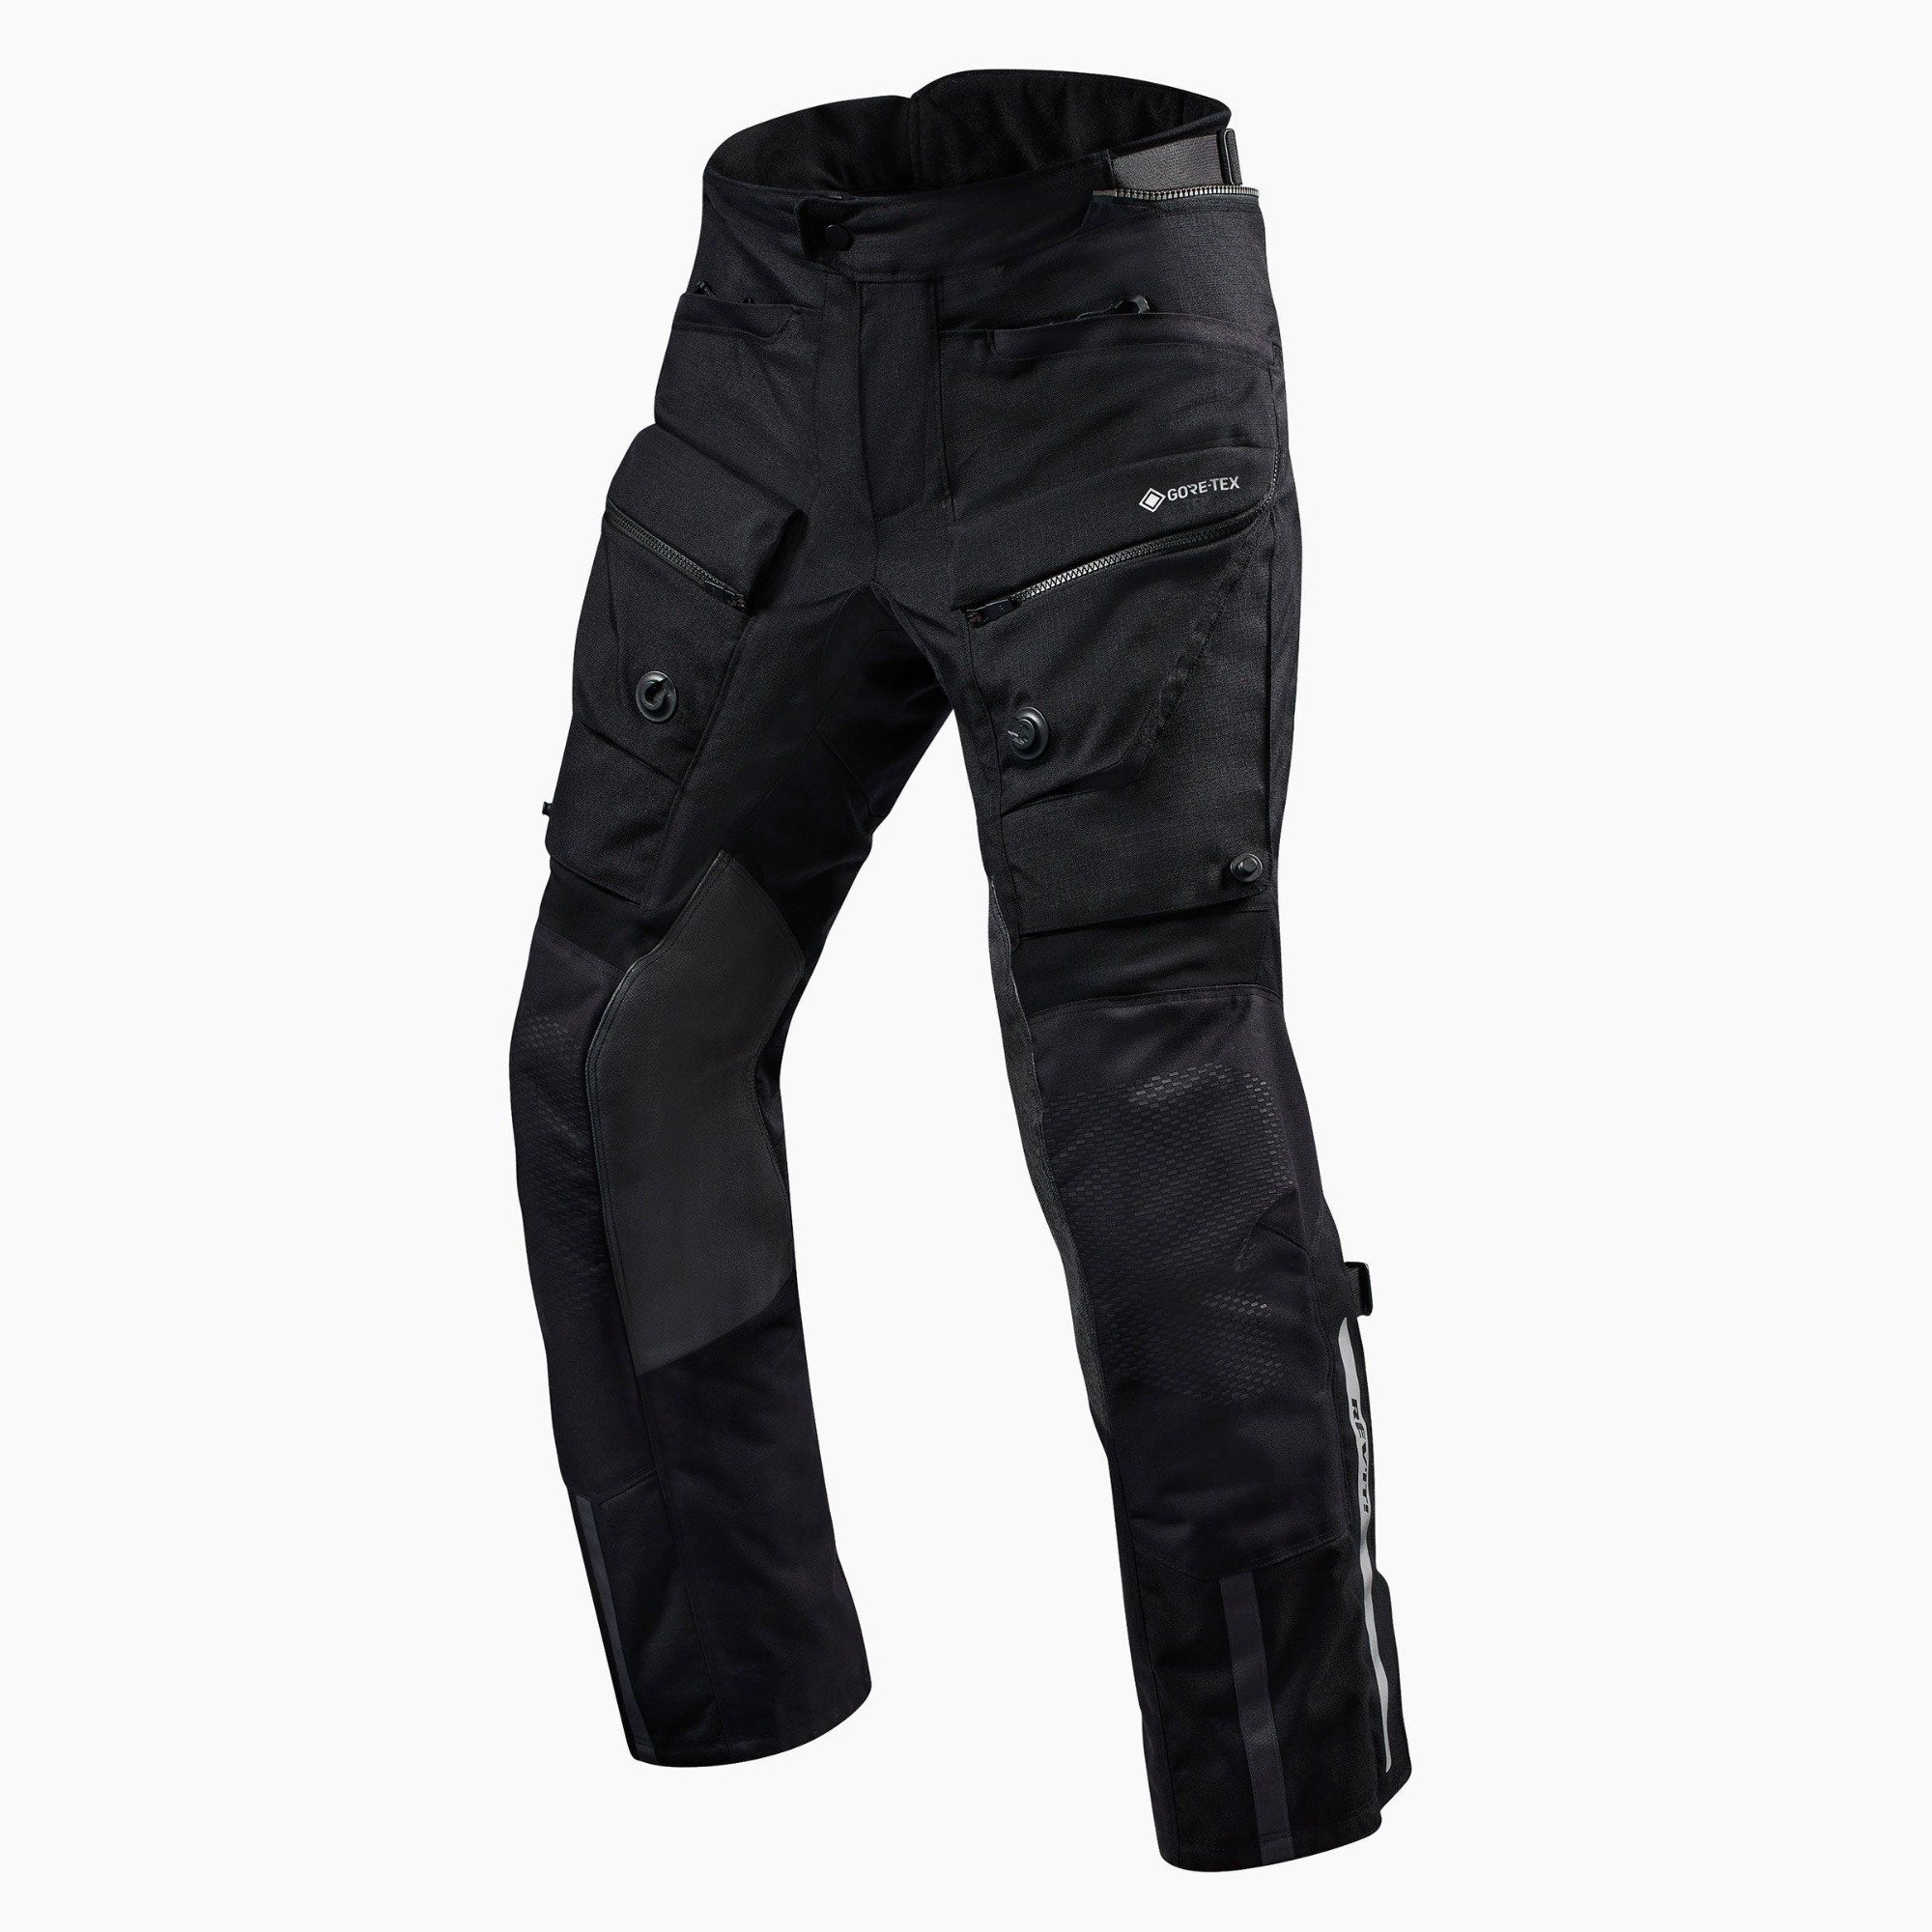 Image of REV'IT! Trousers Defender 3 GTX Black Standard Motorcycle Pants Size S ID 8700001319799